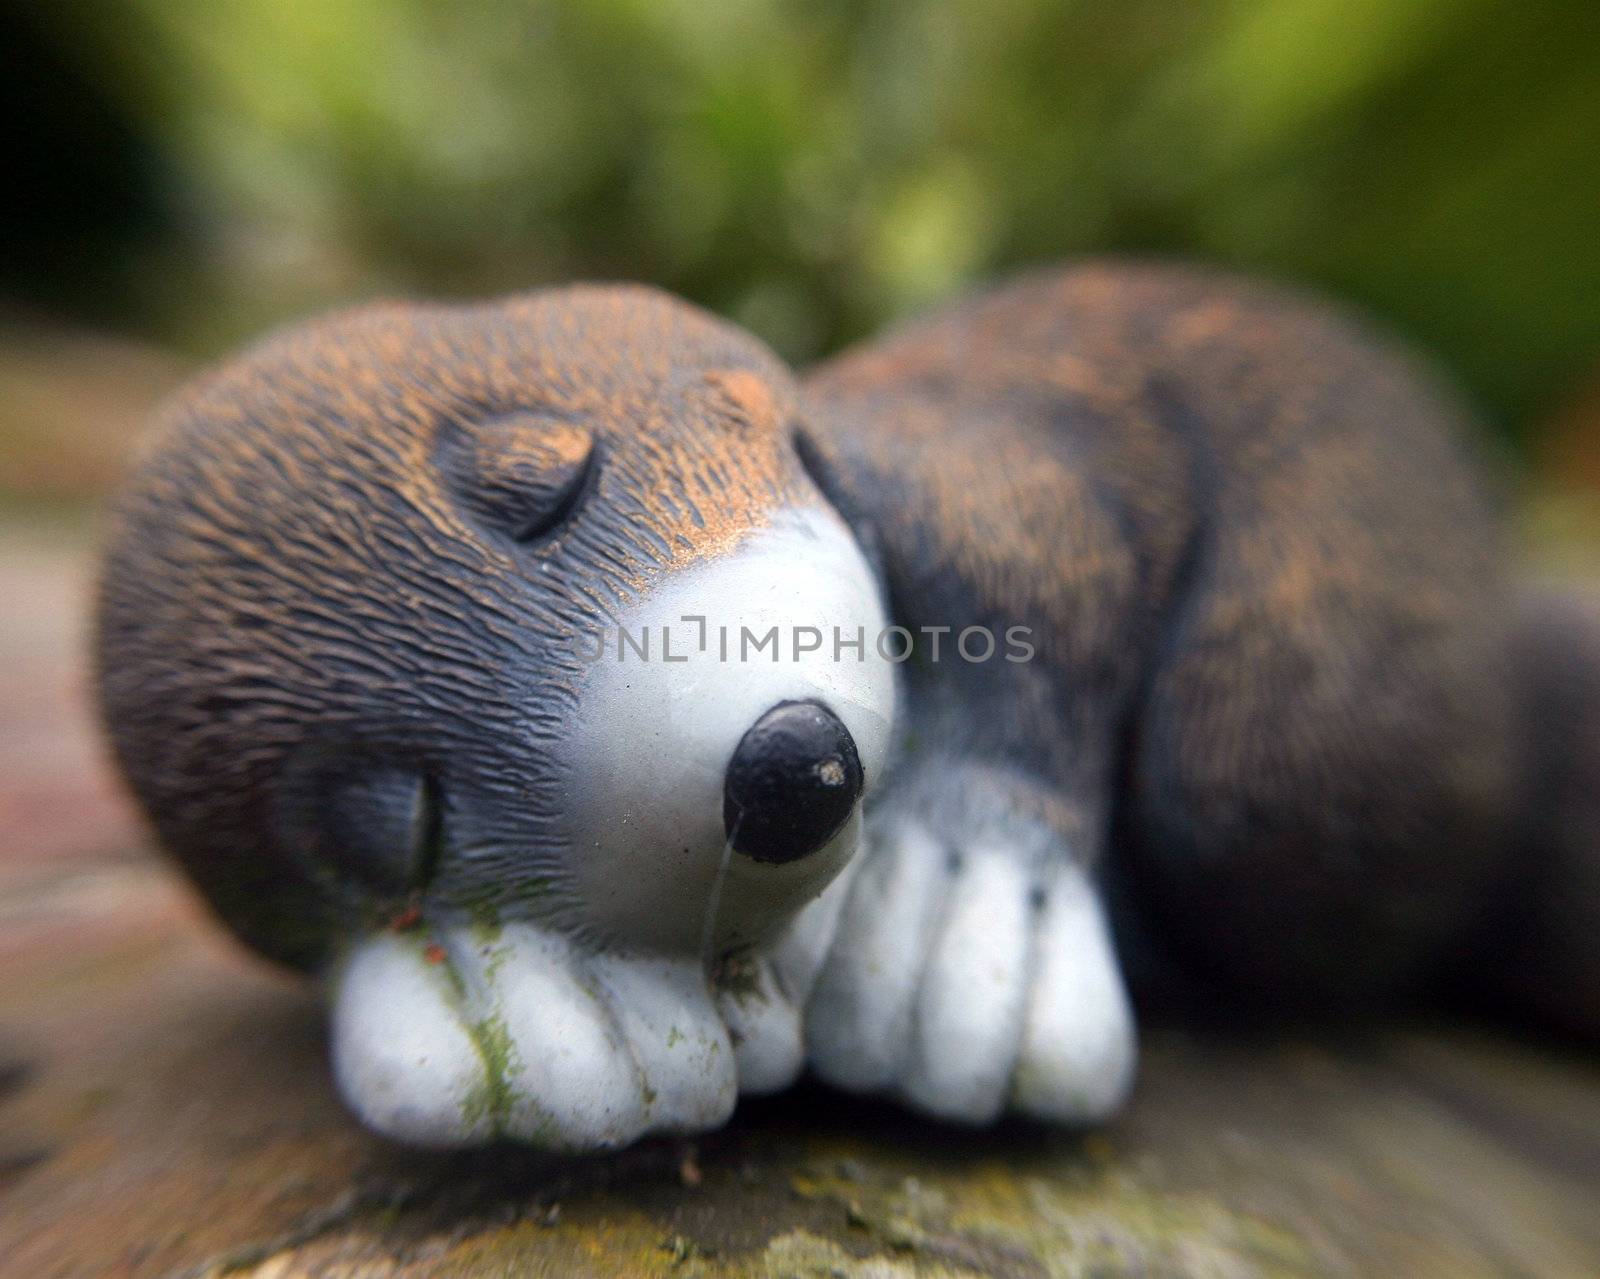 A macro of a mole in a garden...plastic one!